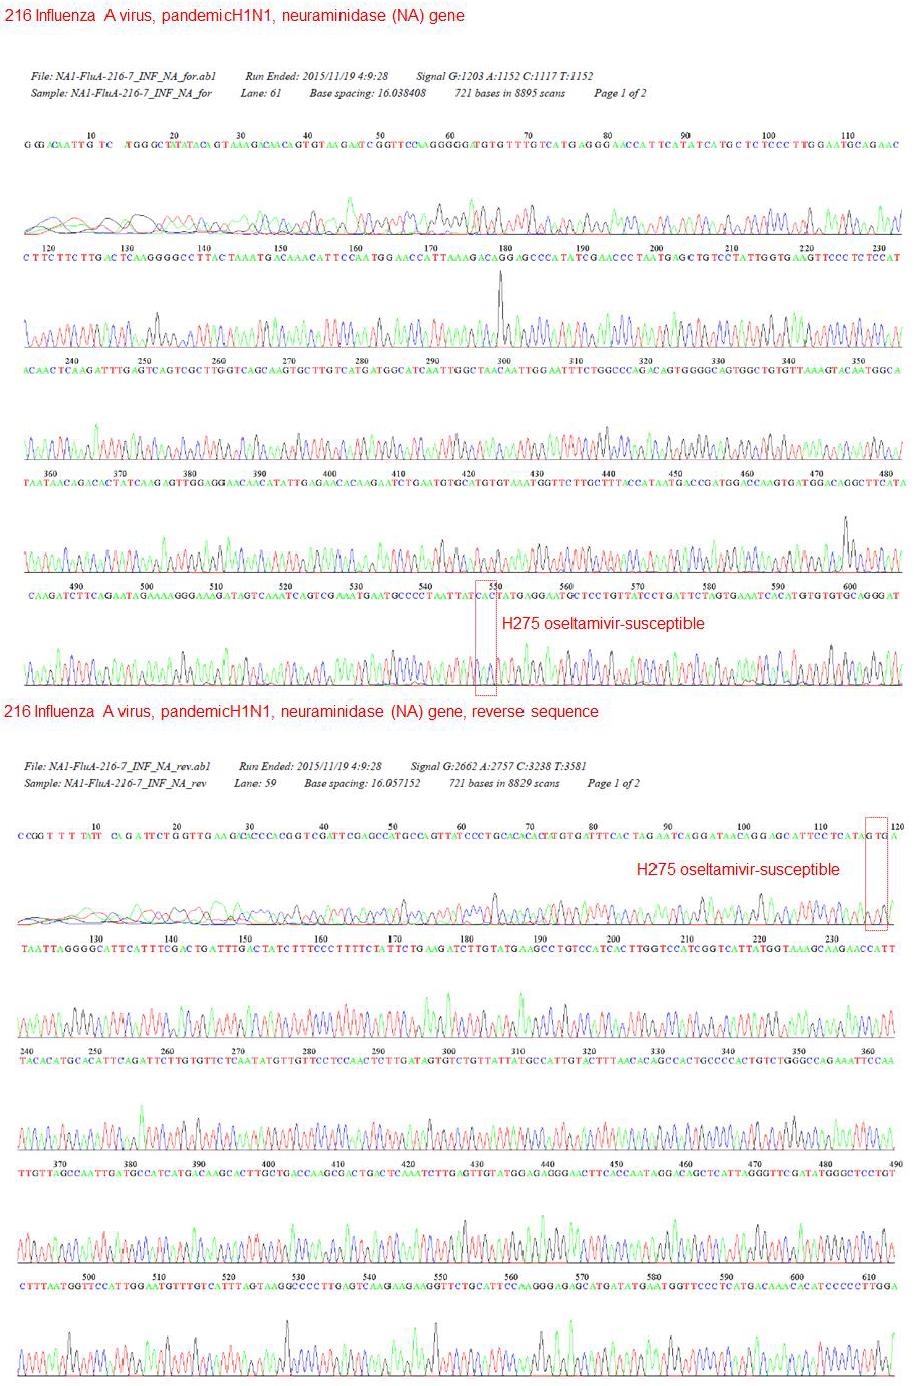 216 pandemic H1N1 2009 주의 oseltamivir 감수성 연관 유전자 (neuraminidase) 분석.